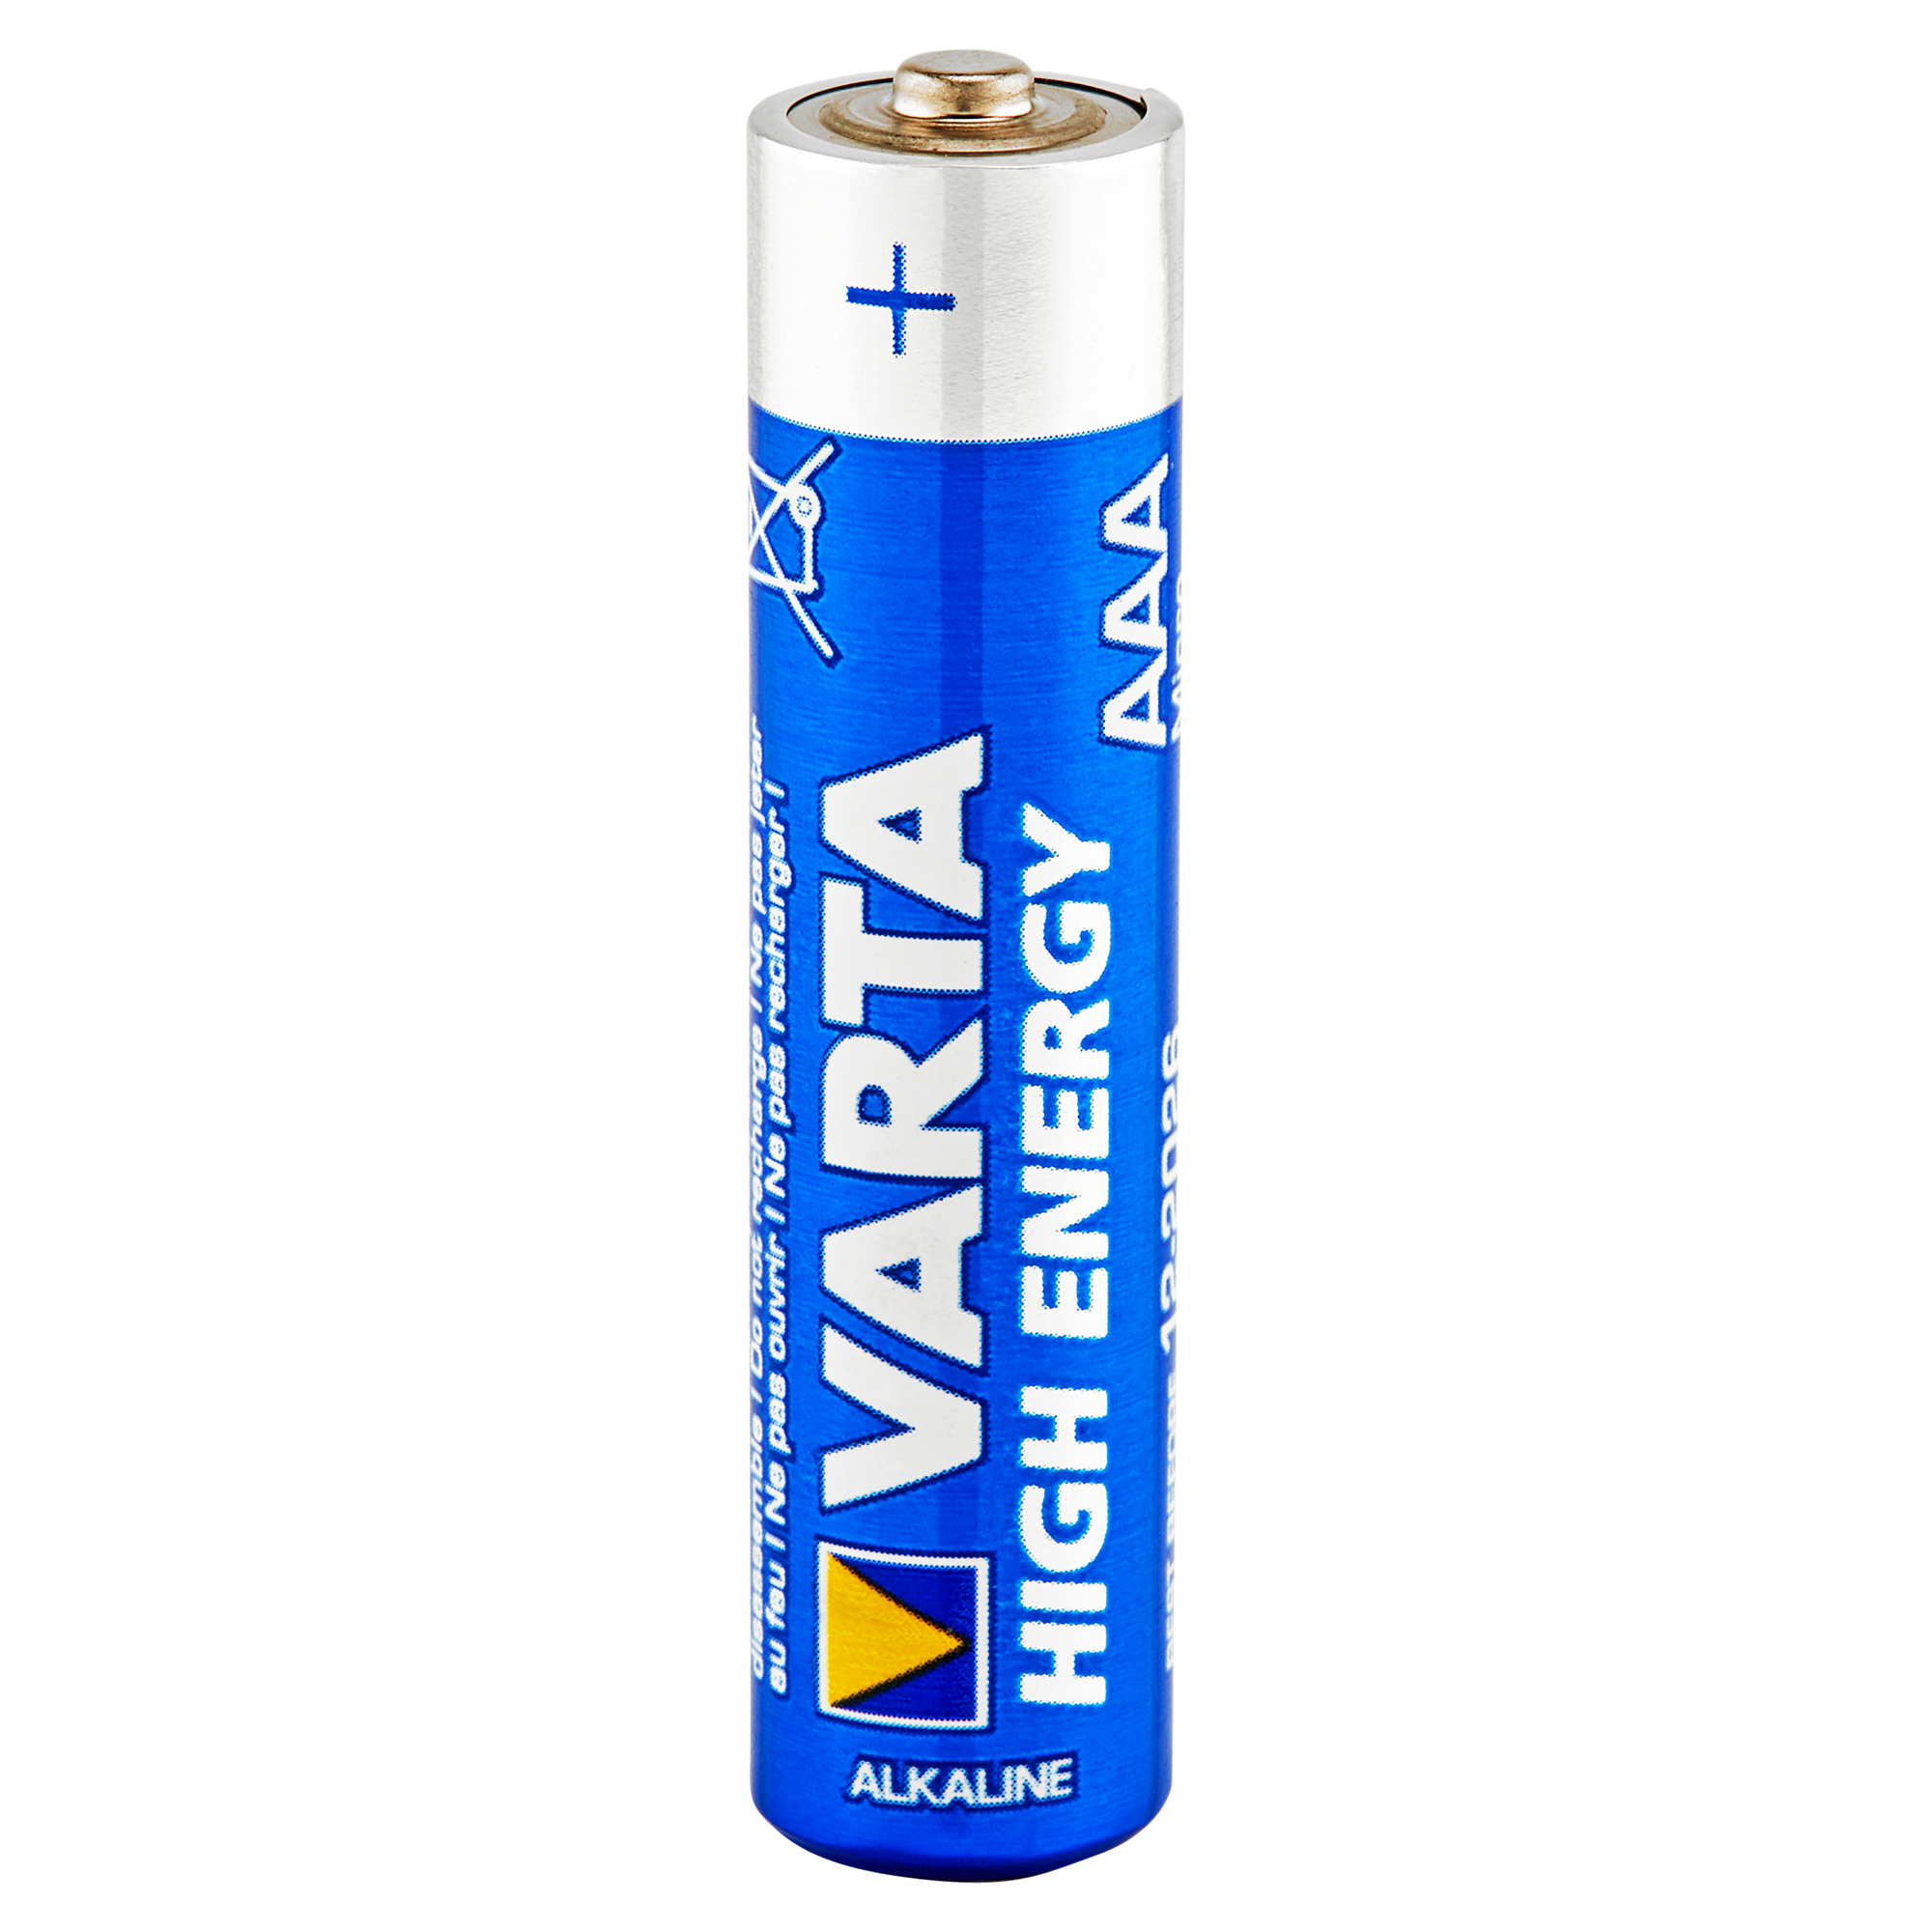 Batterien High Energy AAA Alkaline 24 Stück + product picture